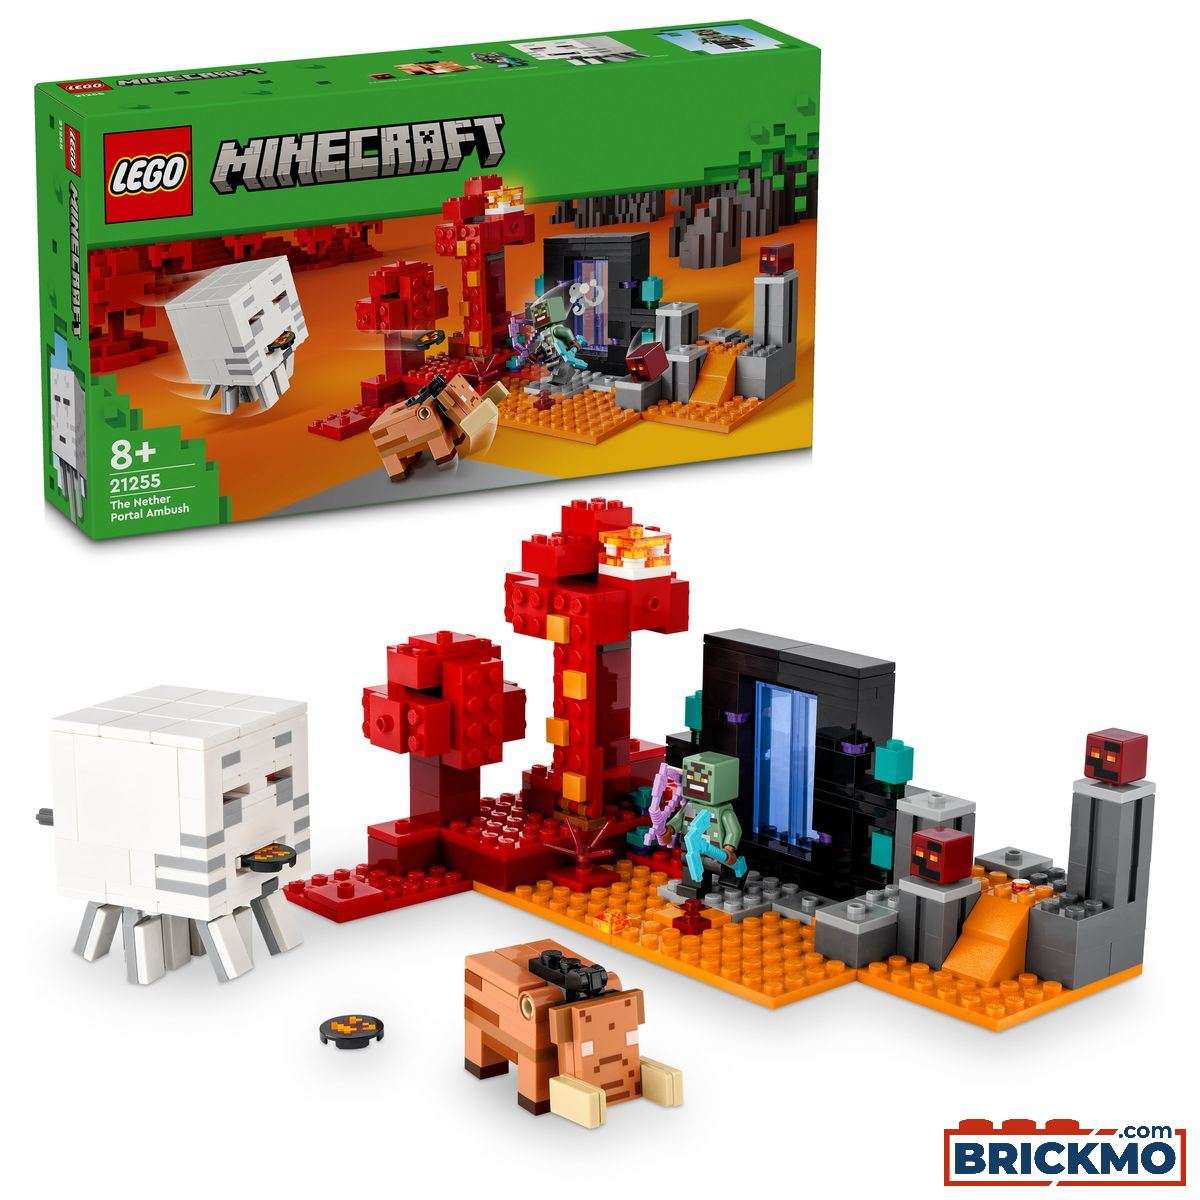 LEGO Minecraft 21255 Hinterhalt am Netherportal 21255